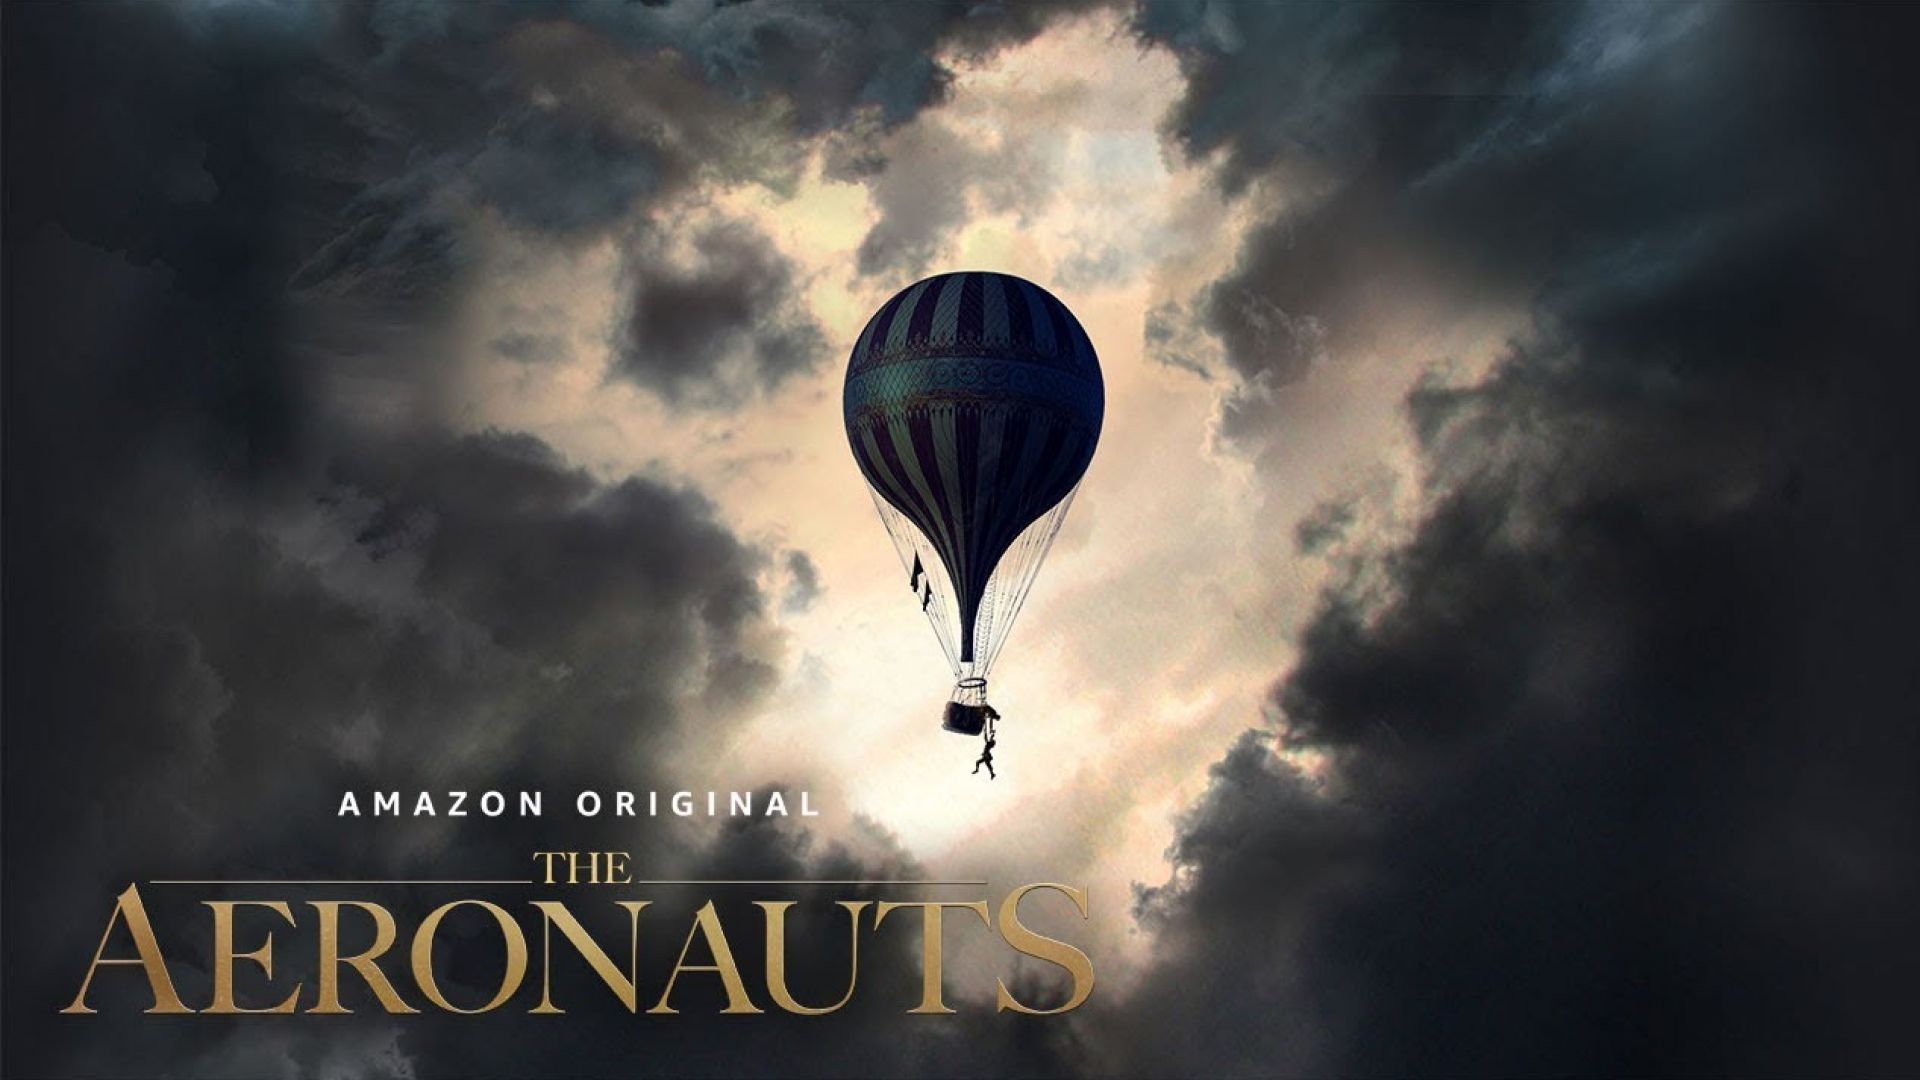 'The Aeronauts' trailer